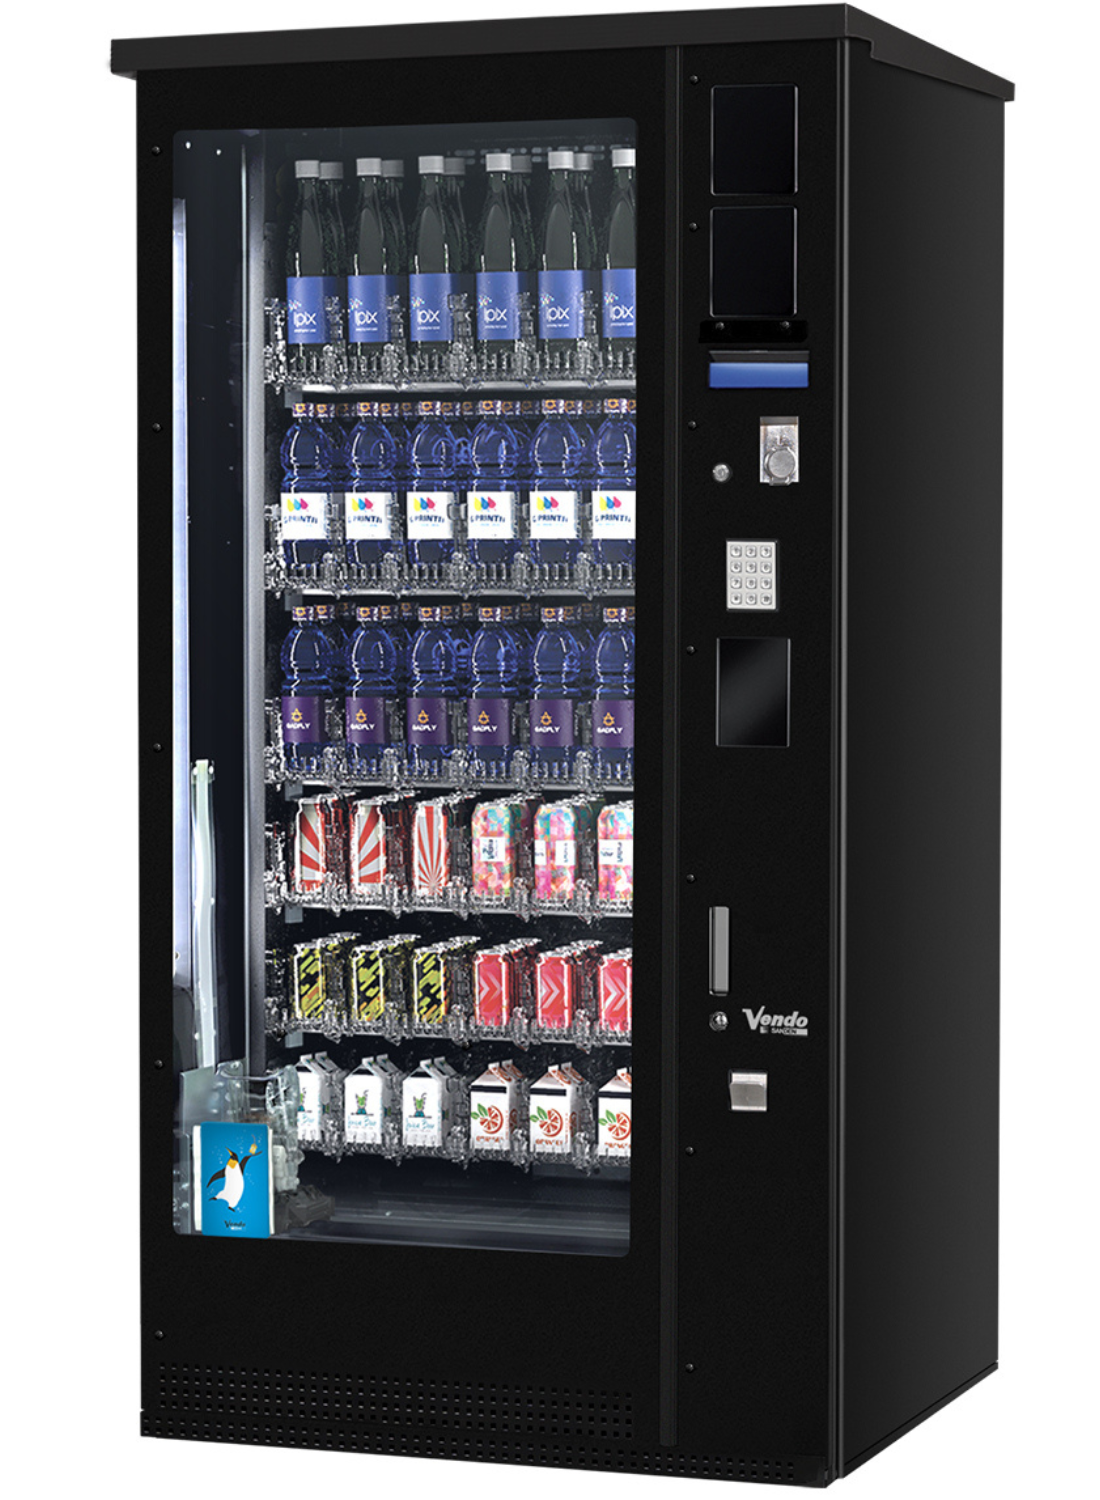 Sanden Vendo G-Drink Outdoor Getränkeautomat – Bornhoff-Automaten Shop